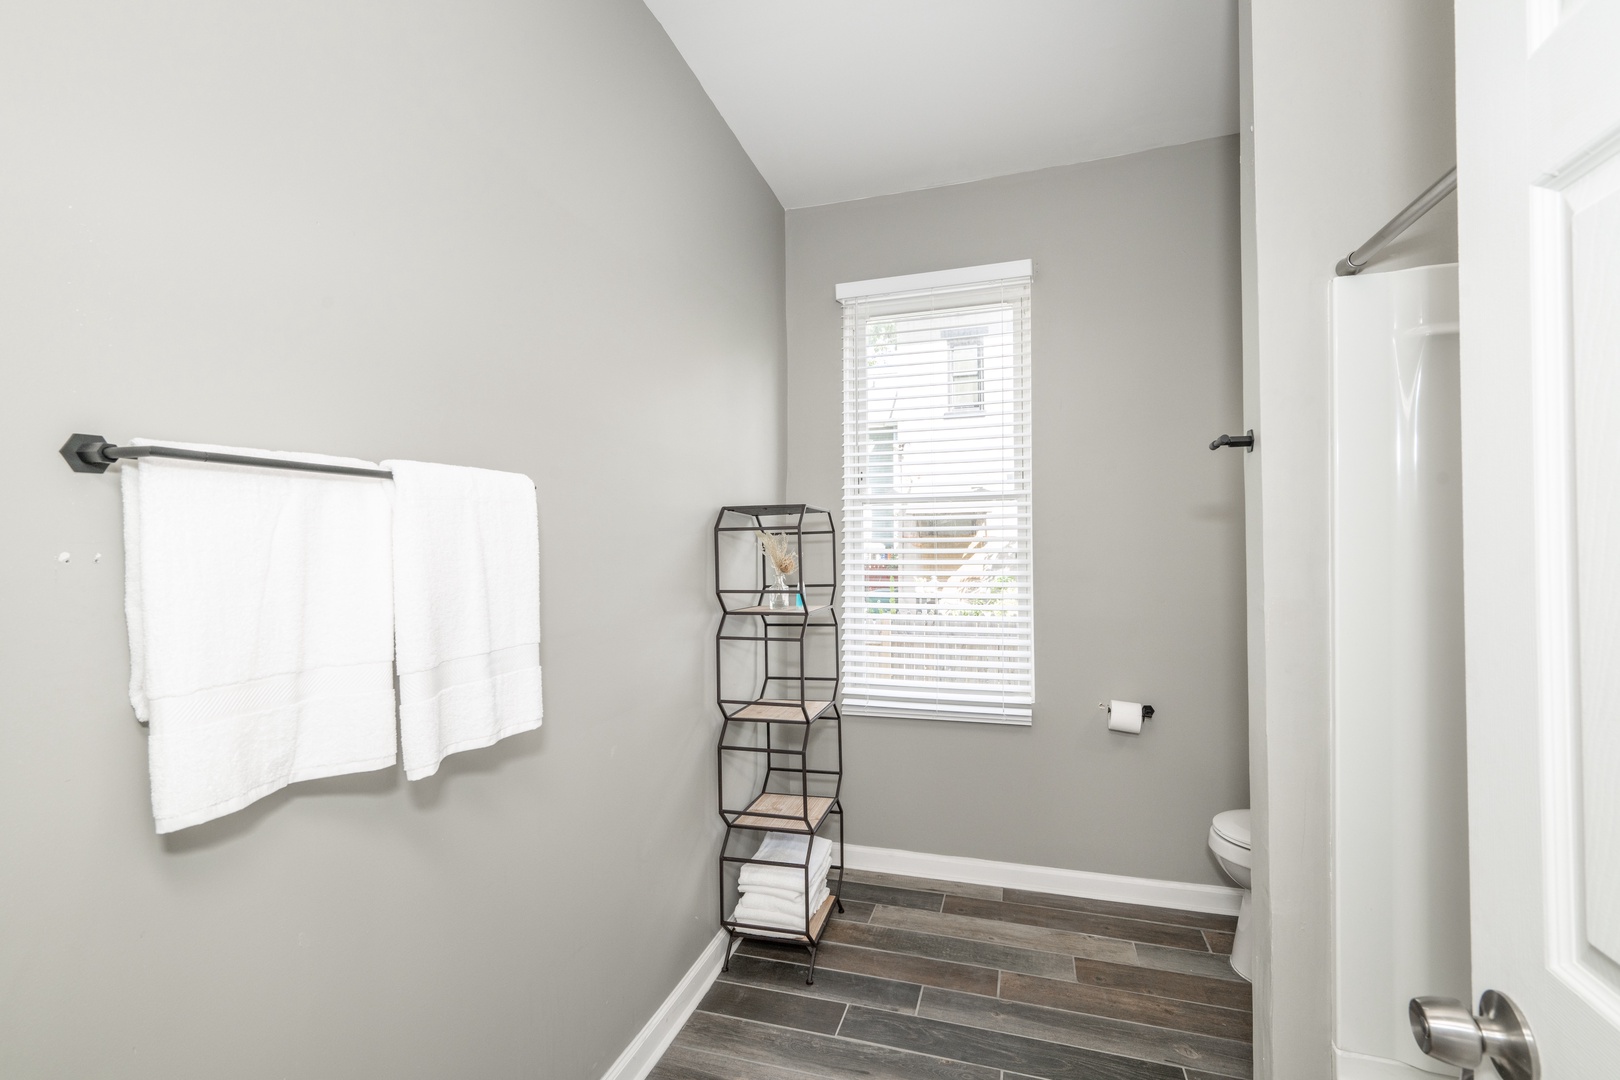 The 1st floor full bathroom offers a single vanity & shower/tub combo